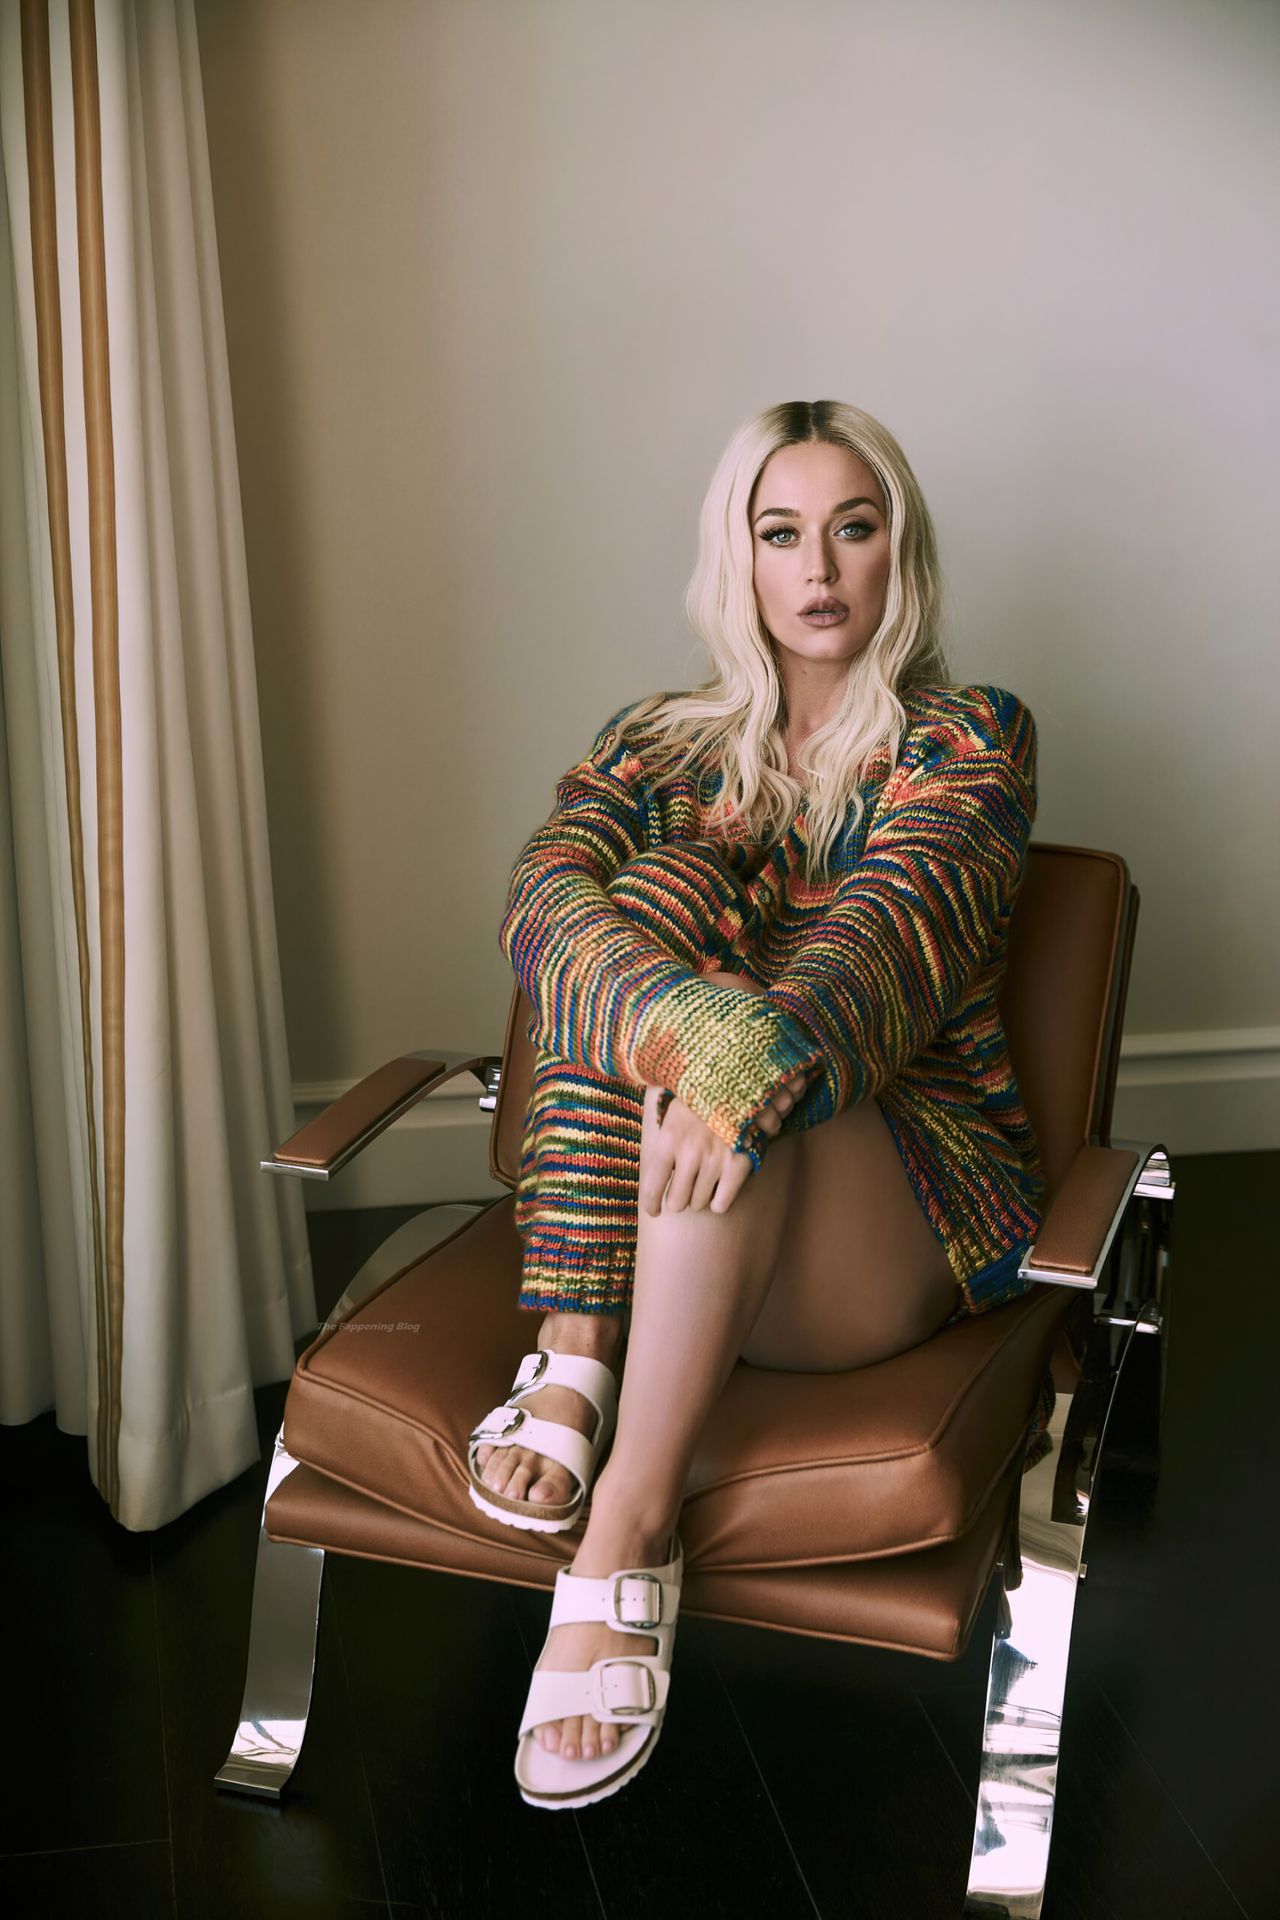 Katy Perry Sexy - L’Officiel Magazine (12 Photos)